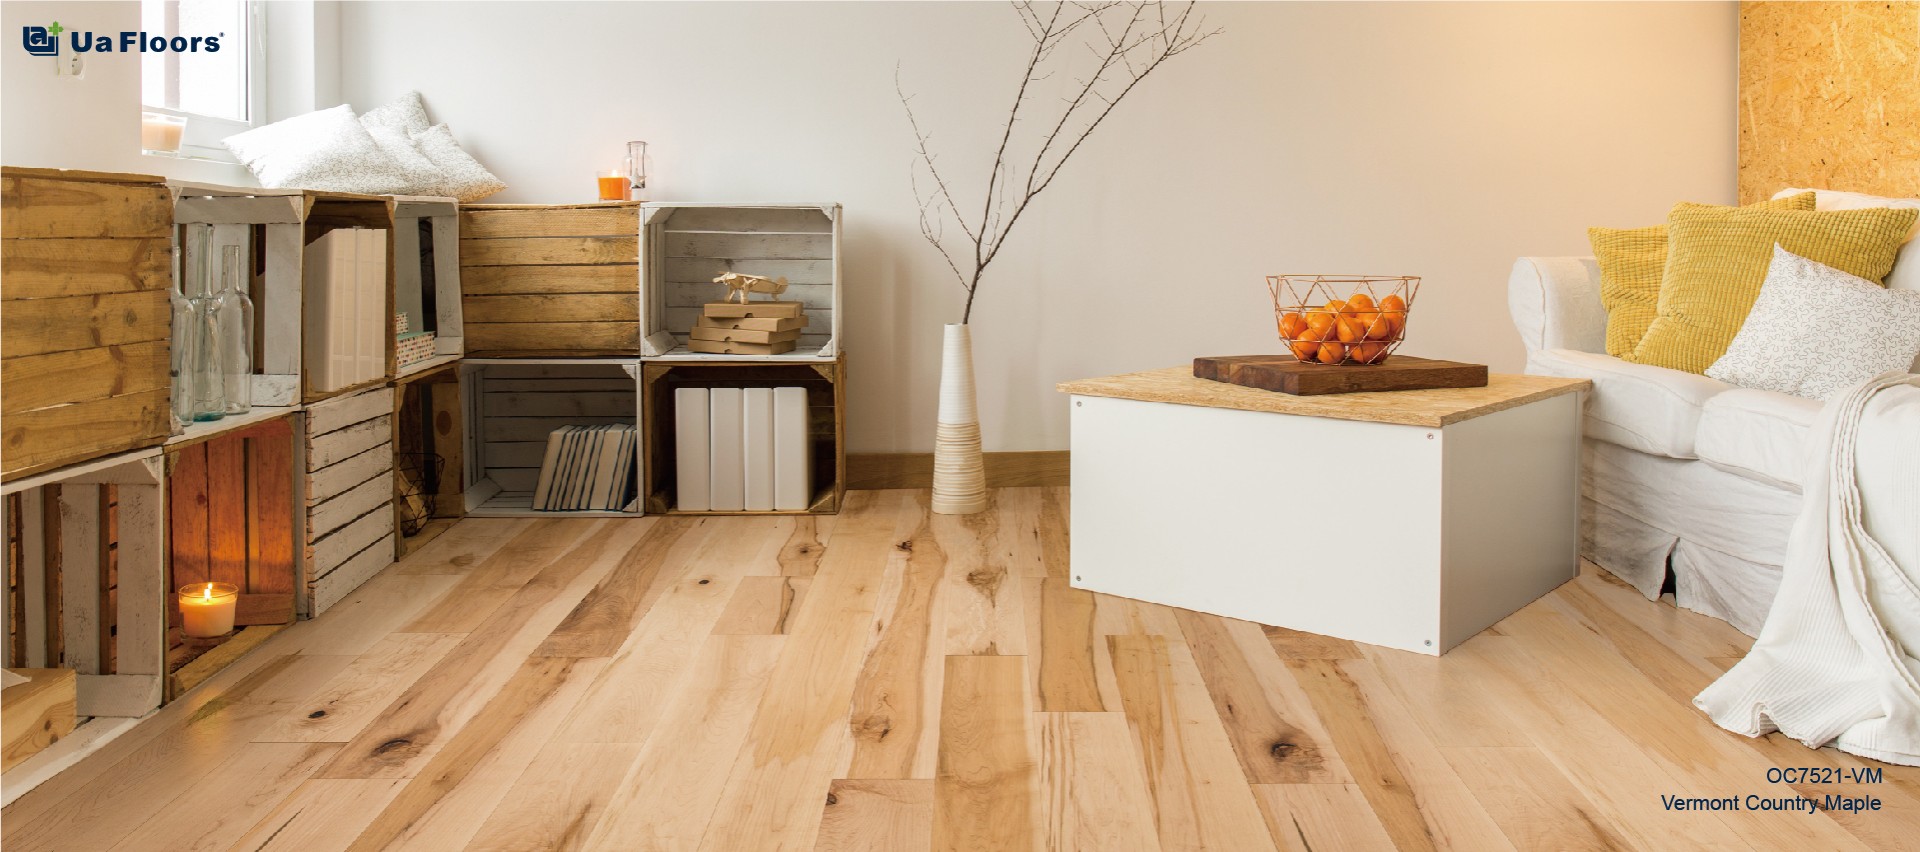 Stylish And Durable Maple Engineered, Commercial Engineered Hardwood Flooring